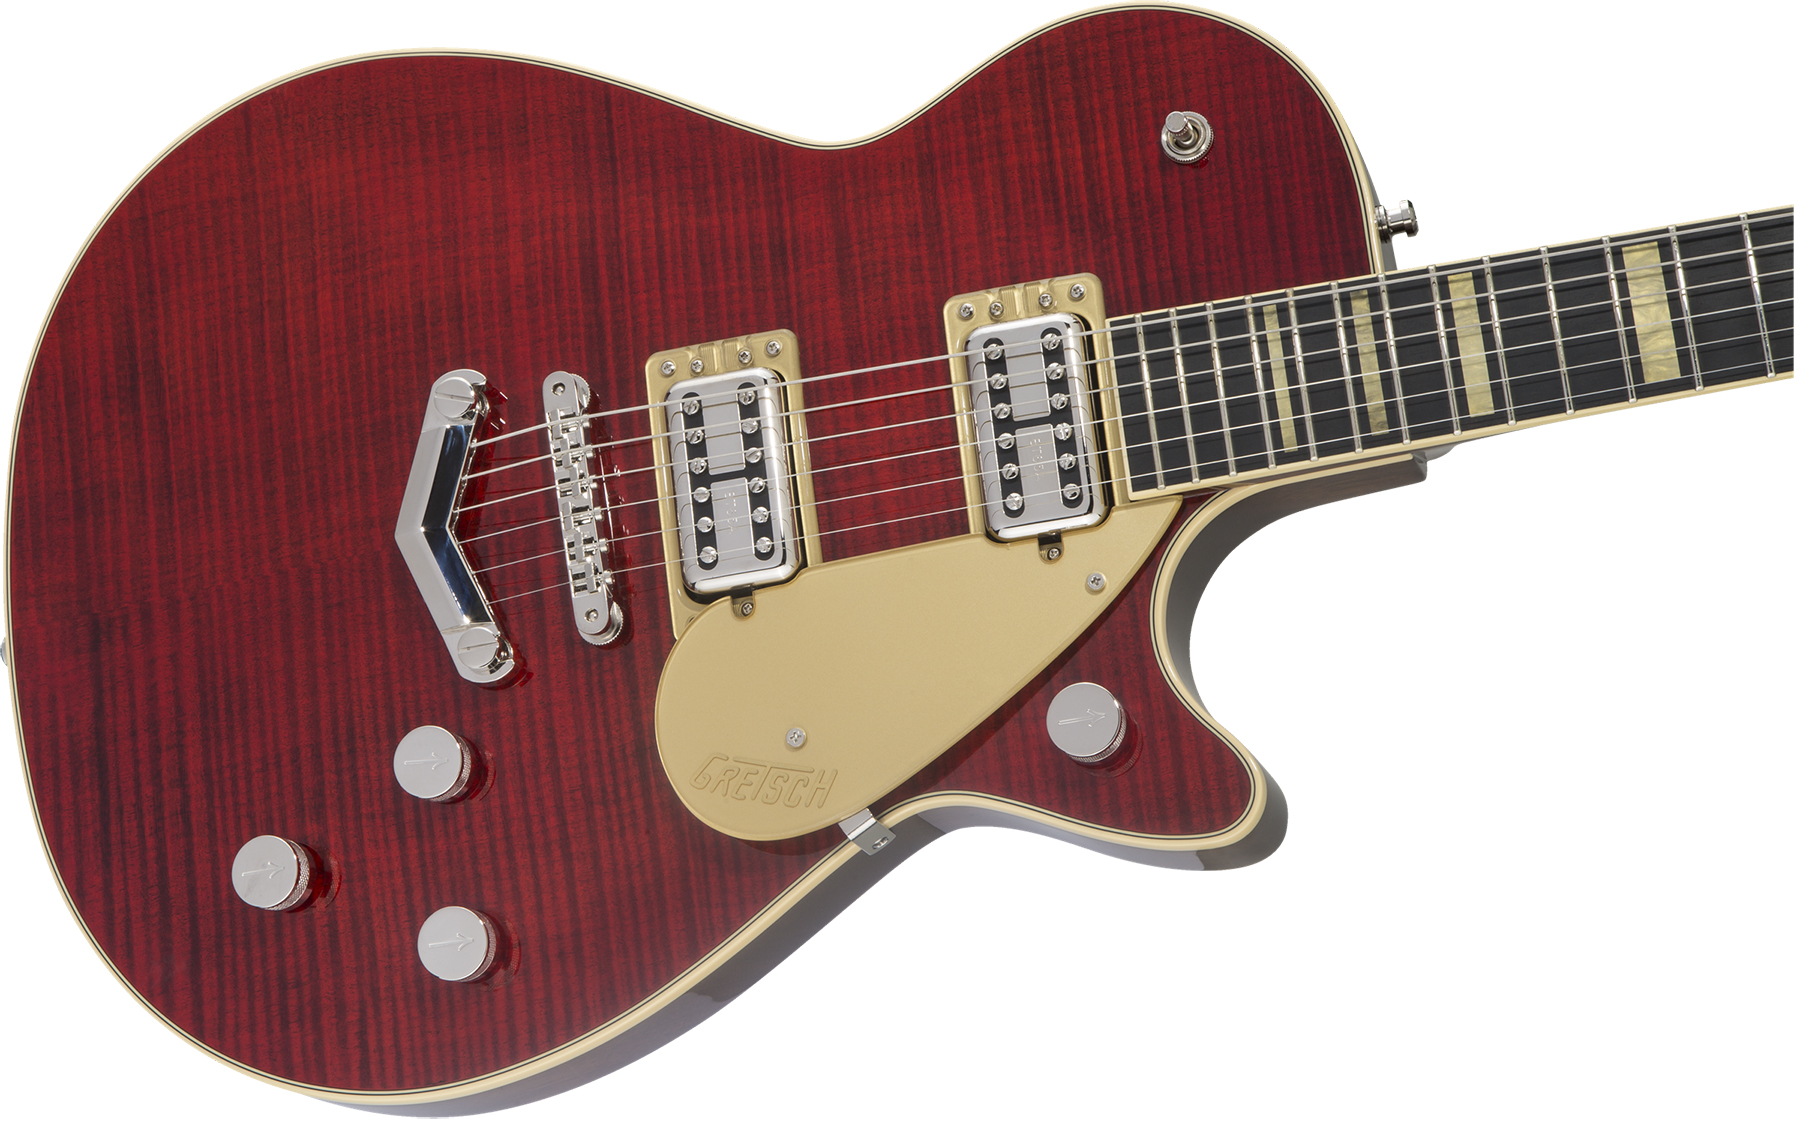 Gretsch G6228fm Players Edition Jet Bt Stoptail Professional Japon Ht Hh Eb - Crimson Stain - Semi hollow elektriche gitaar - Variation 2